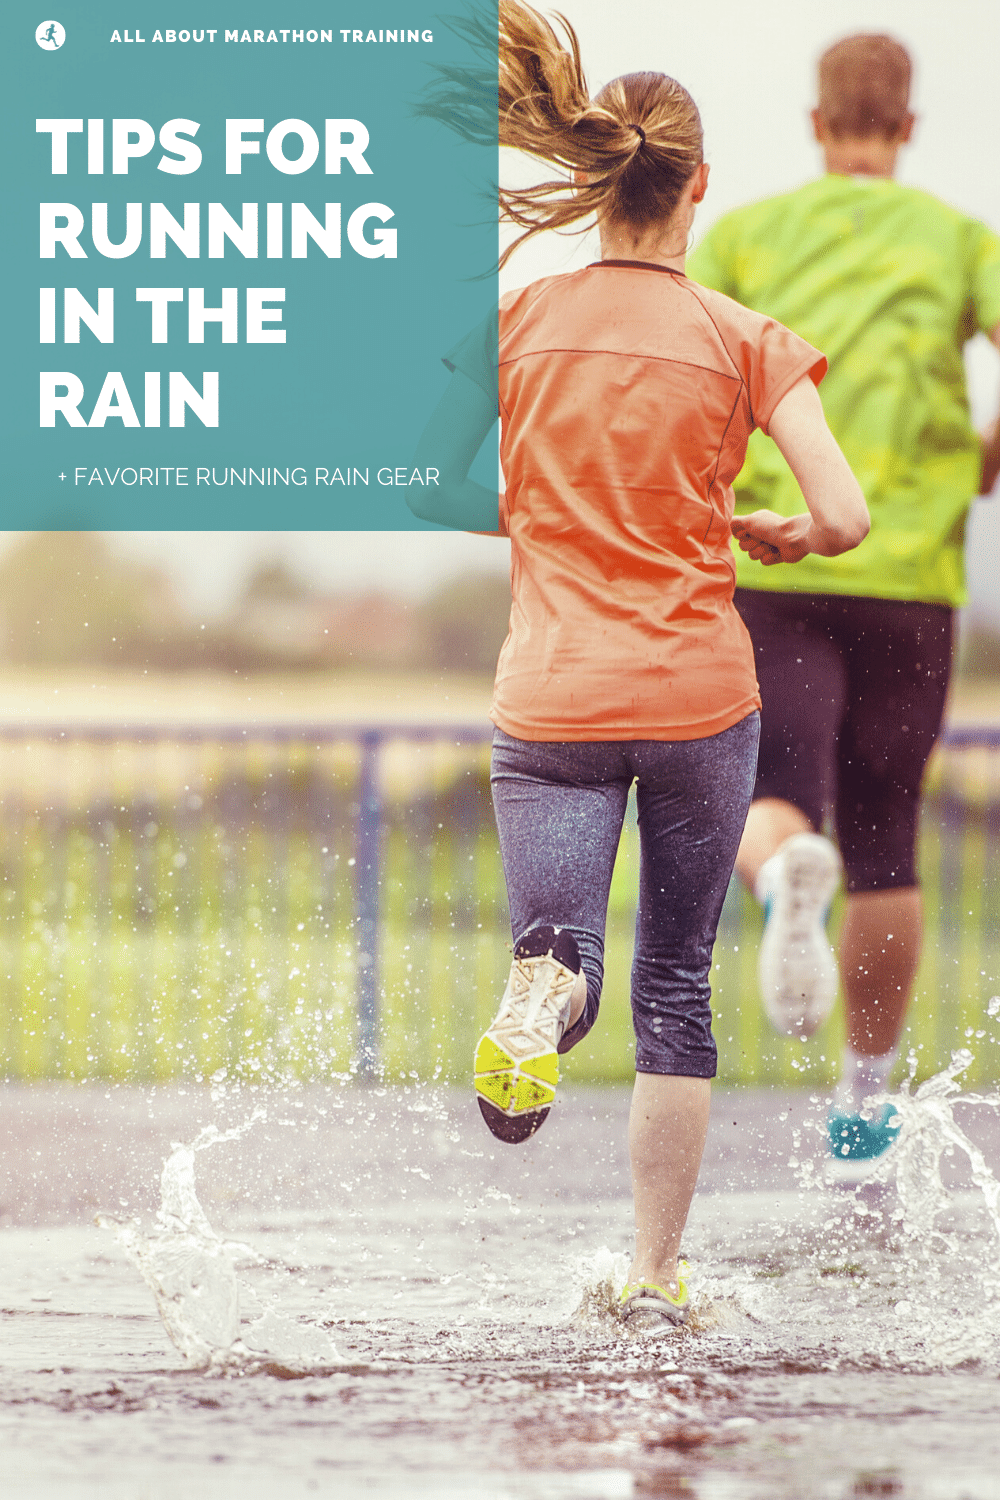 Tips for running in the rain